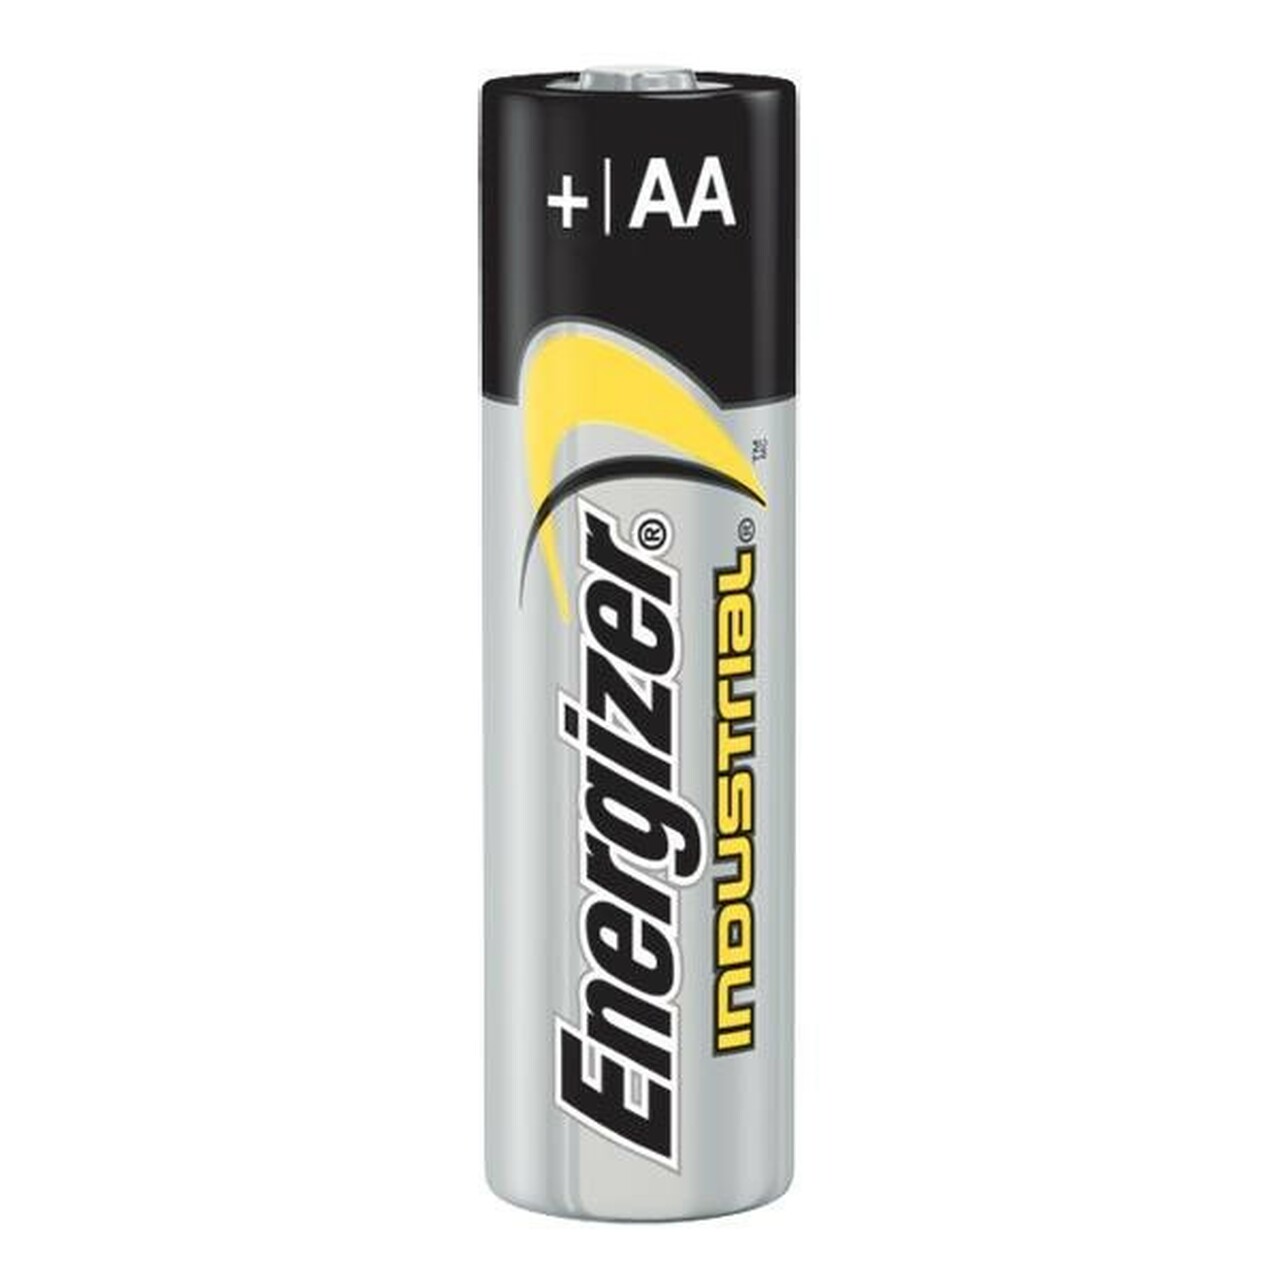 Energizer - Batteries Industrial Alkaline Batteries, Part No. AA BATEN - 1.5 Volts - 24 Per Pack